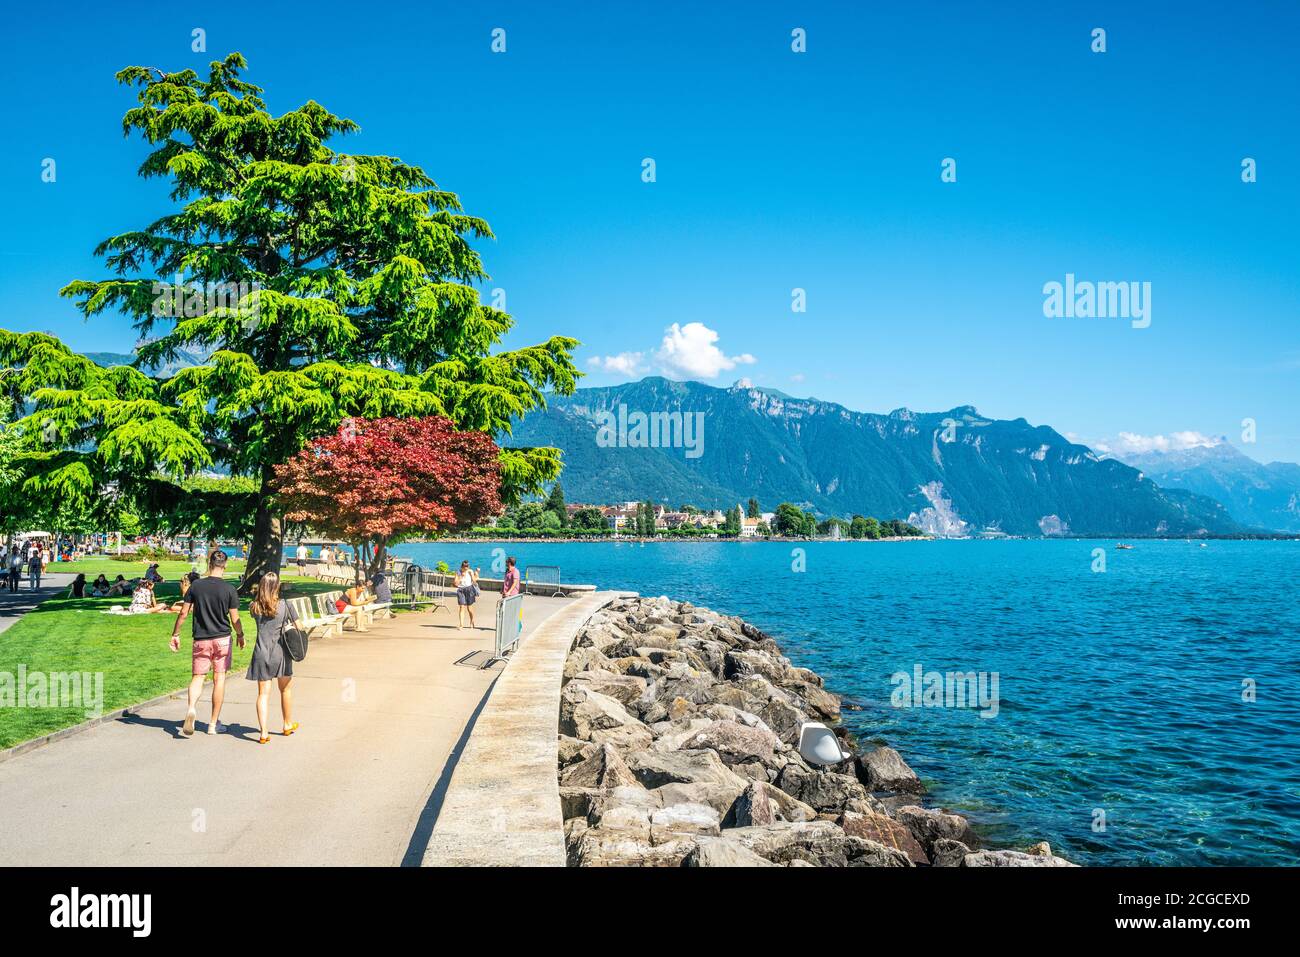 Vevey Switzerland , 4 July 2020 : People walking on Vevey lakeside pedestrian quay promenade along Lake Geneva on sunny summer day in Vaud Switzerland Stock Photo